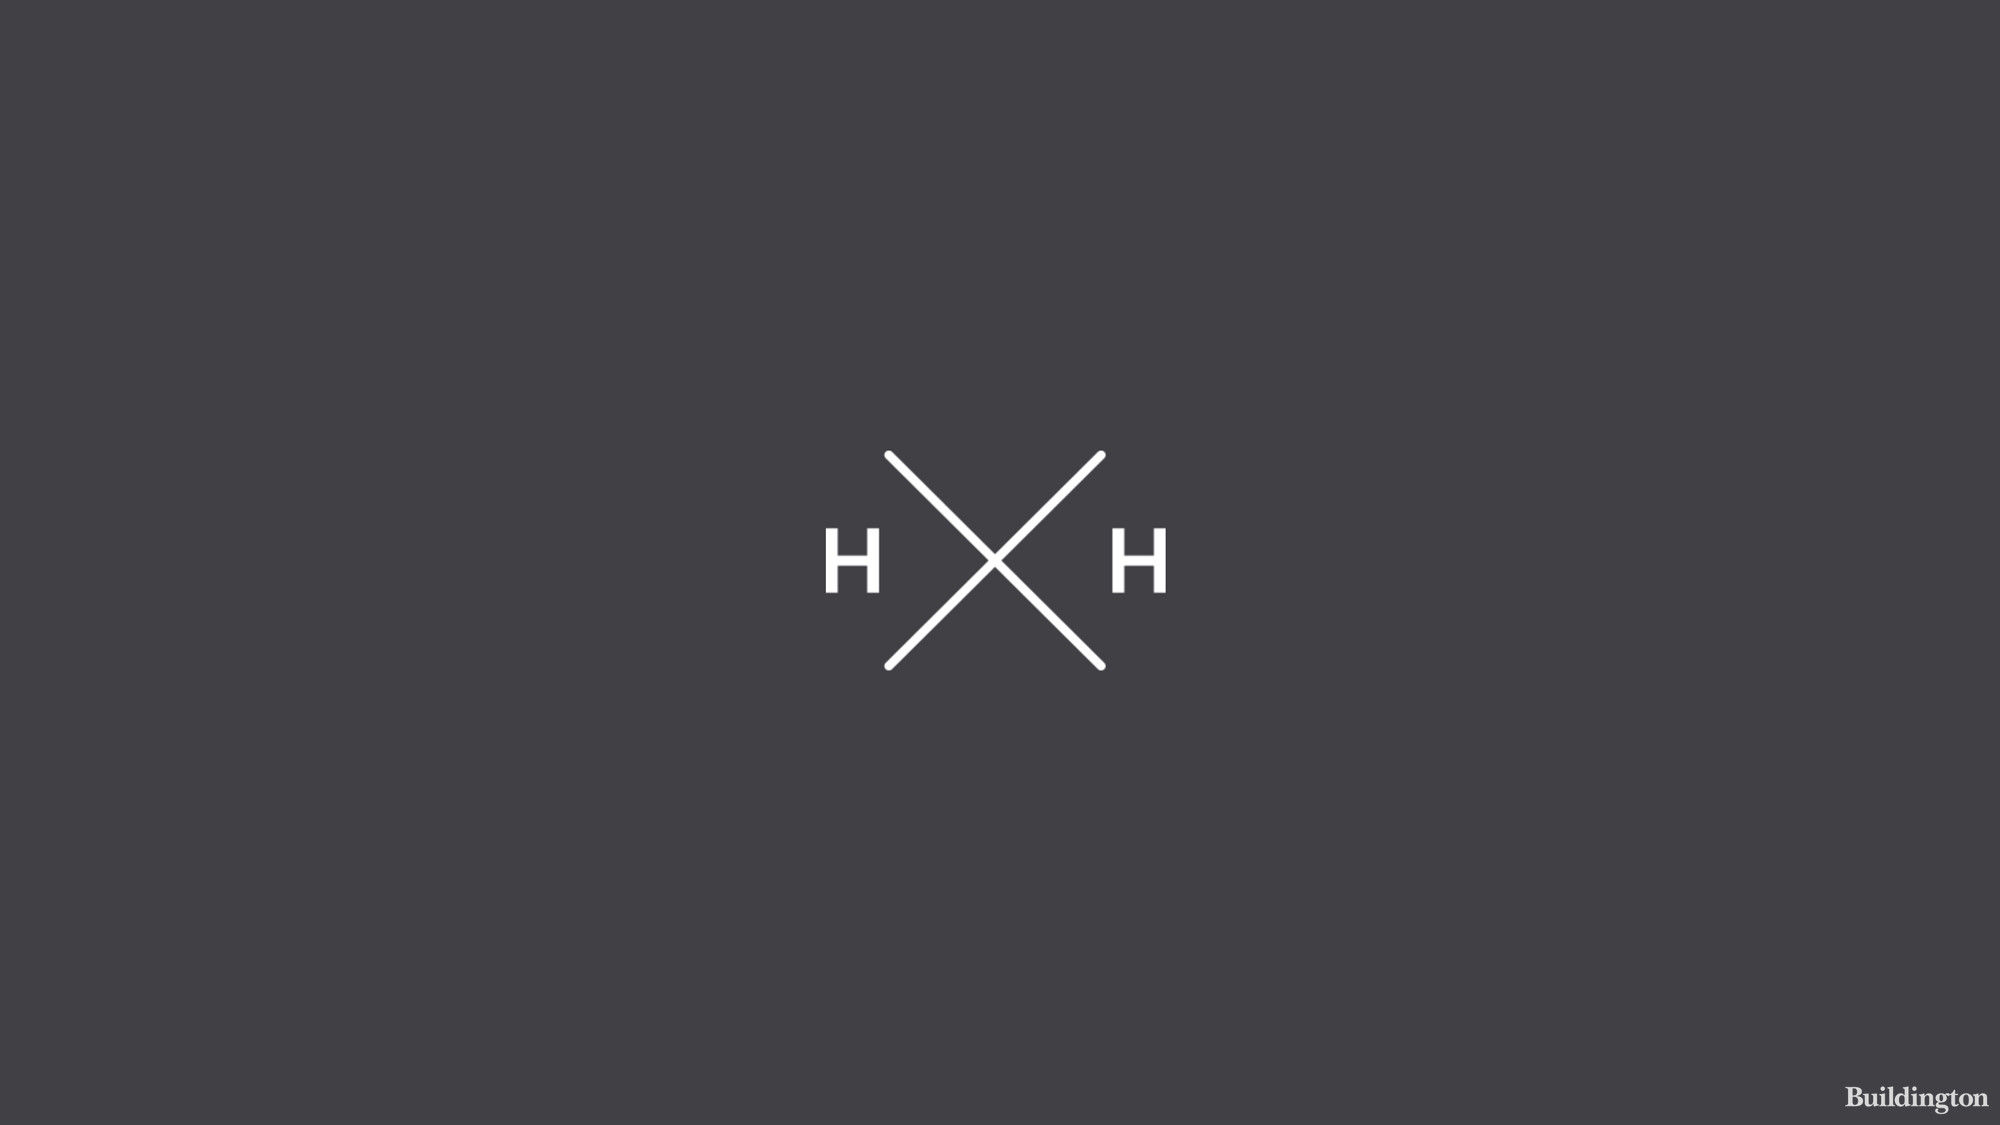 Hoxton House logo